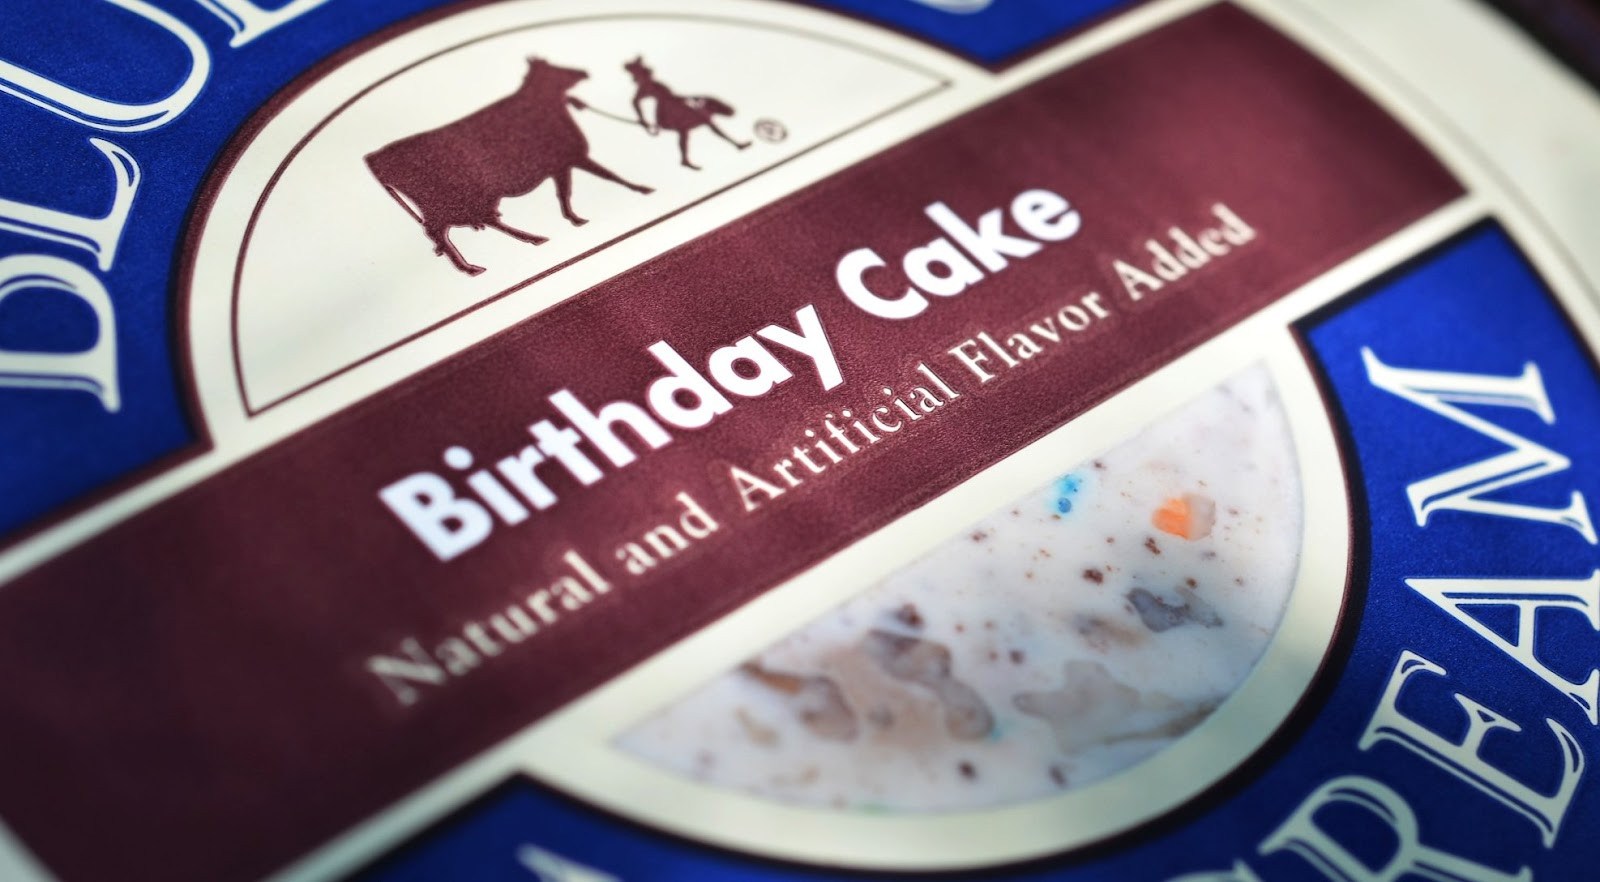 Blue Bell Birthday Cake Ice Cream
 food and ice cream recipes REVIEW Blue Bell Birthday Cake